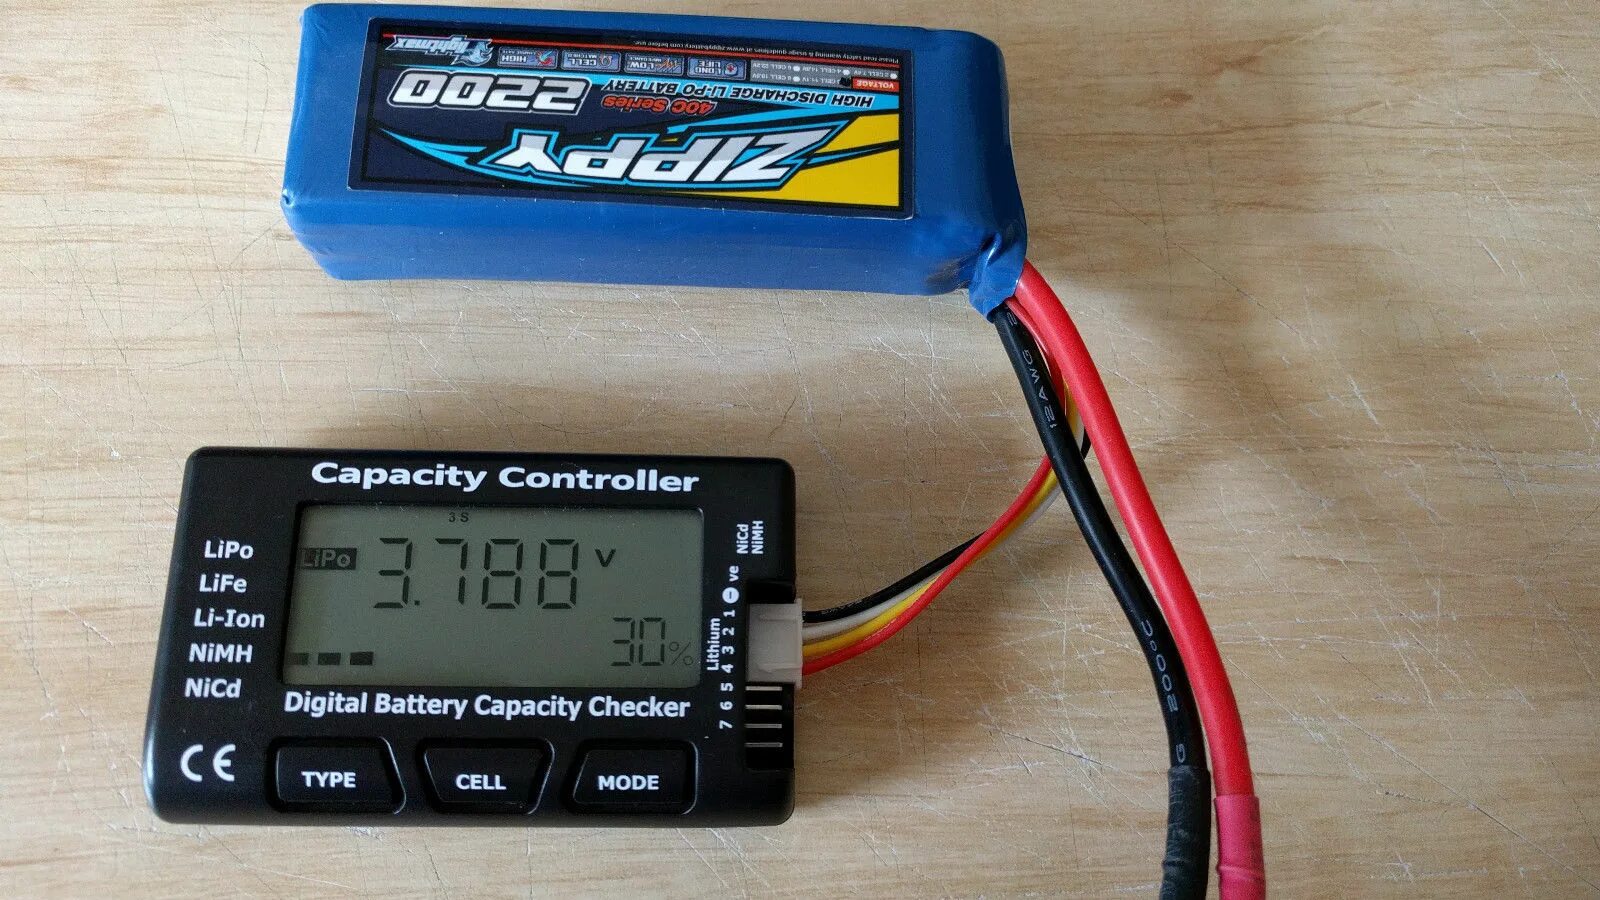 Battery capacity. Контроллер тестер. Батарея тестер для проверки емкости Lipo Life li-ion NIMH NICD. Battery Controller Tester. Липо метр.